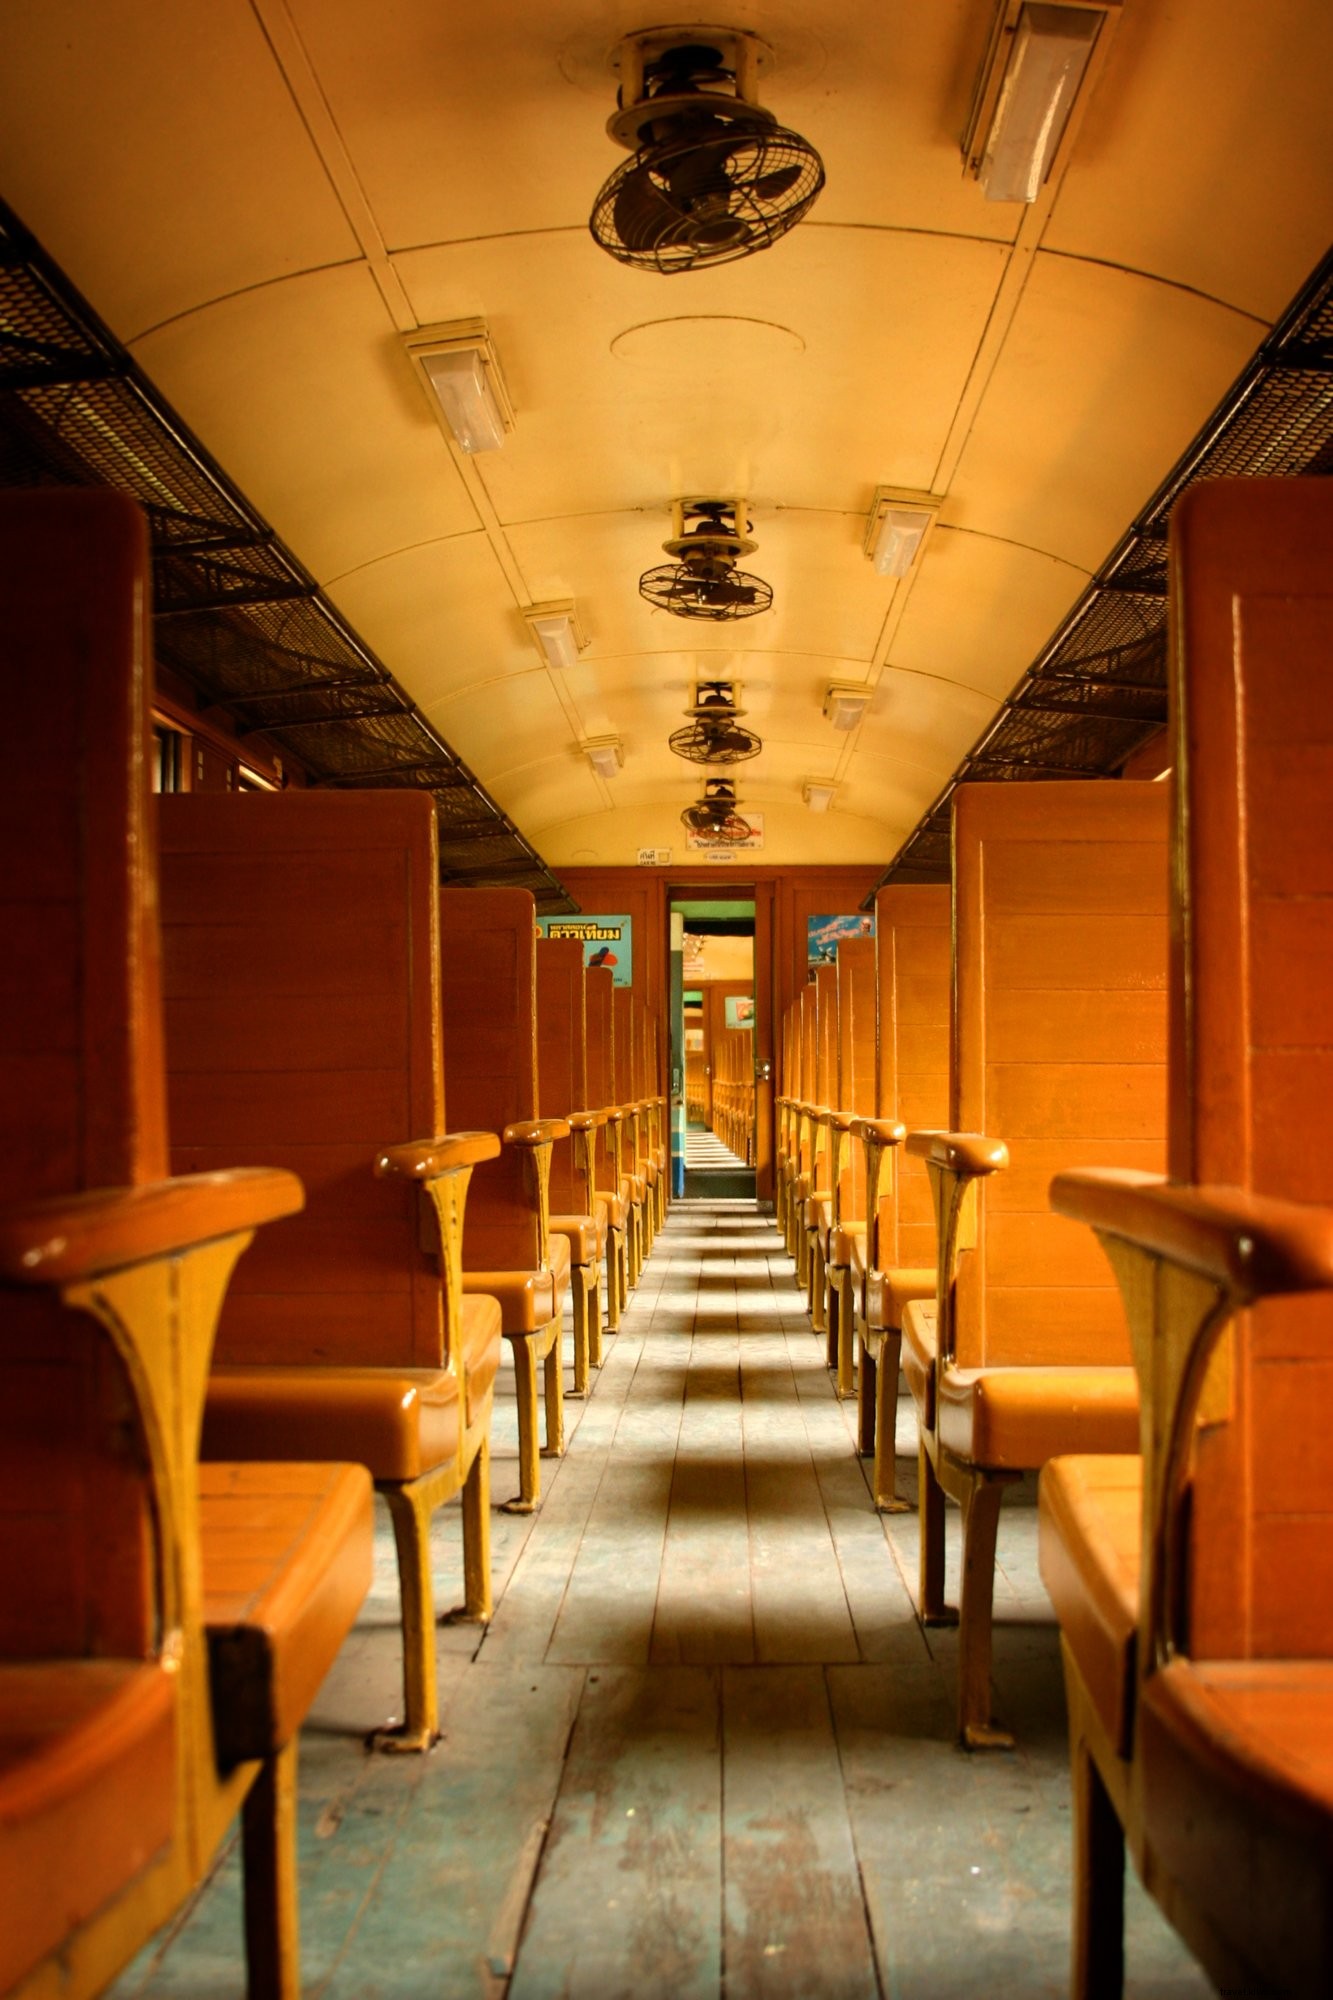 Foto de vagón de tren vintage de madera